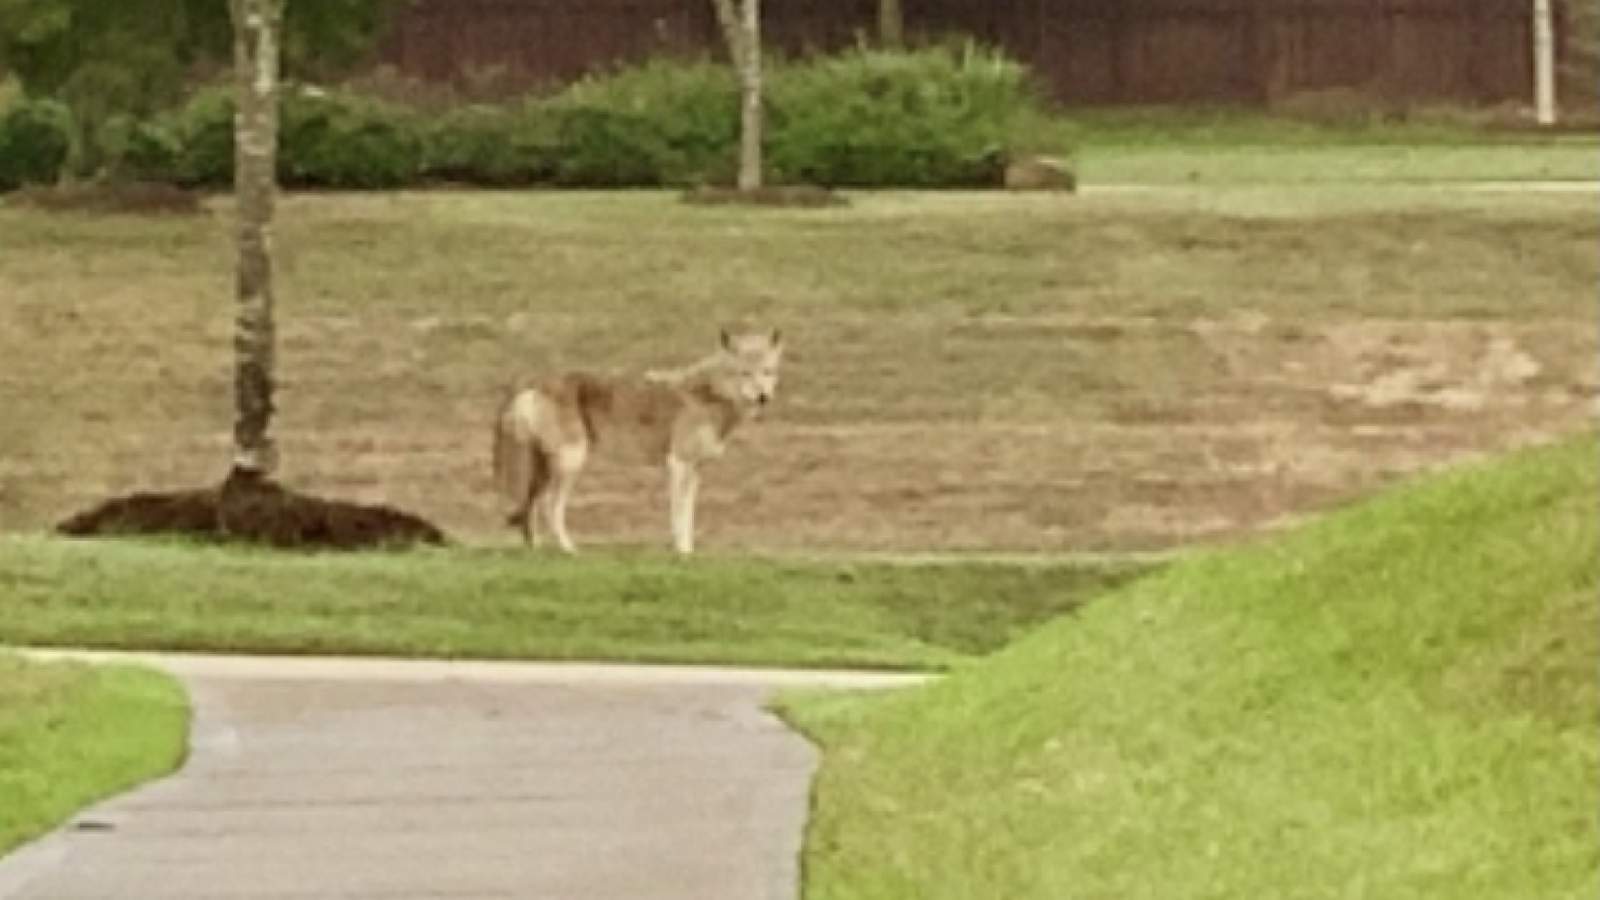 Neighborhood alert: Coyote sighting in broad daylight in Katy, Fulshear areas